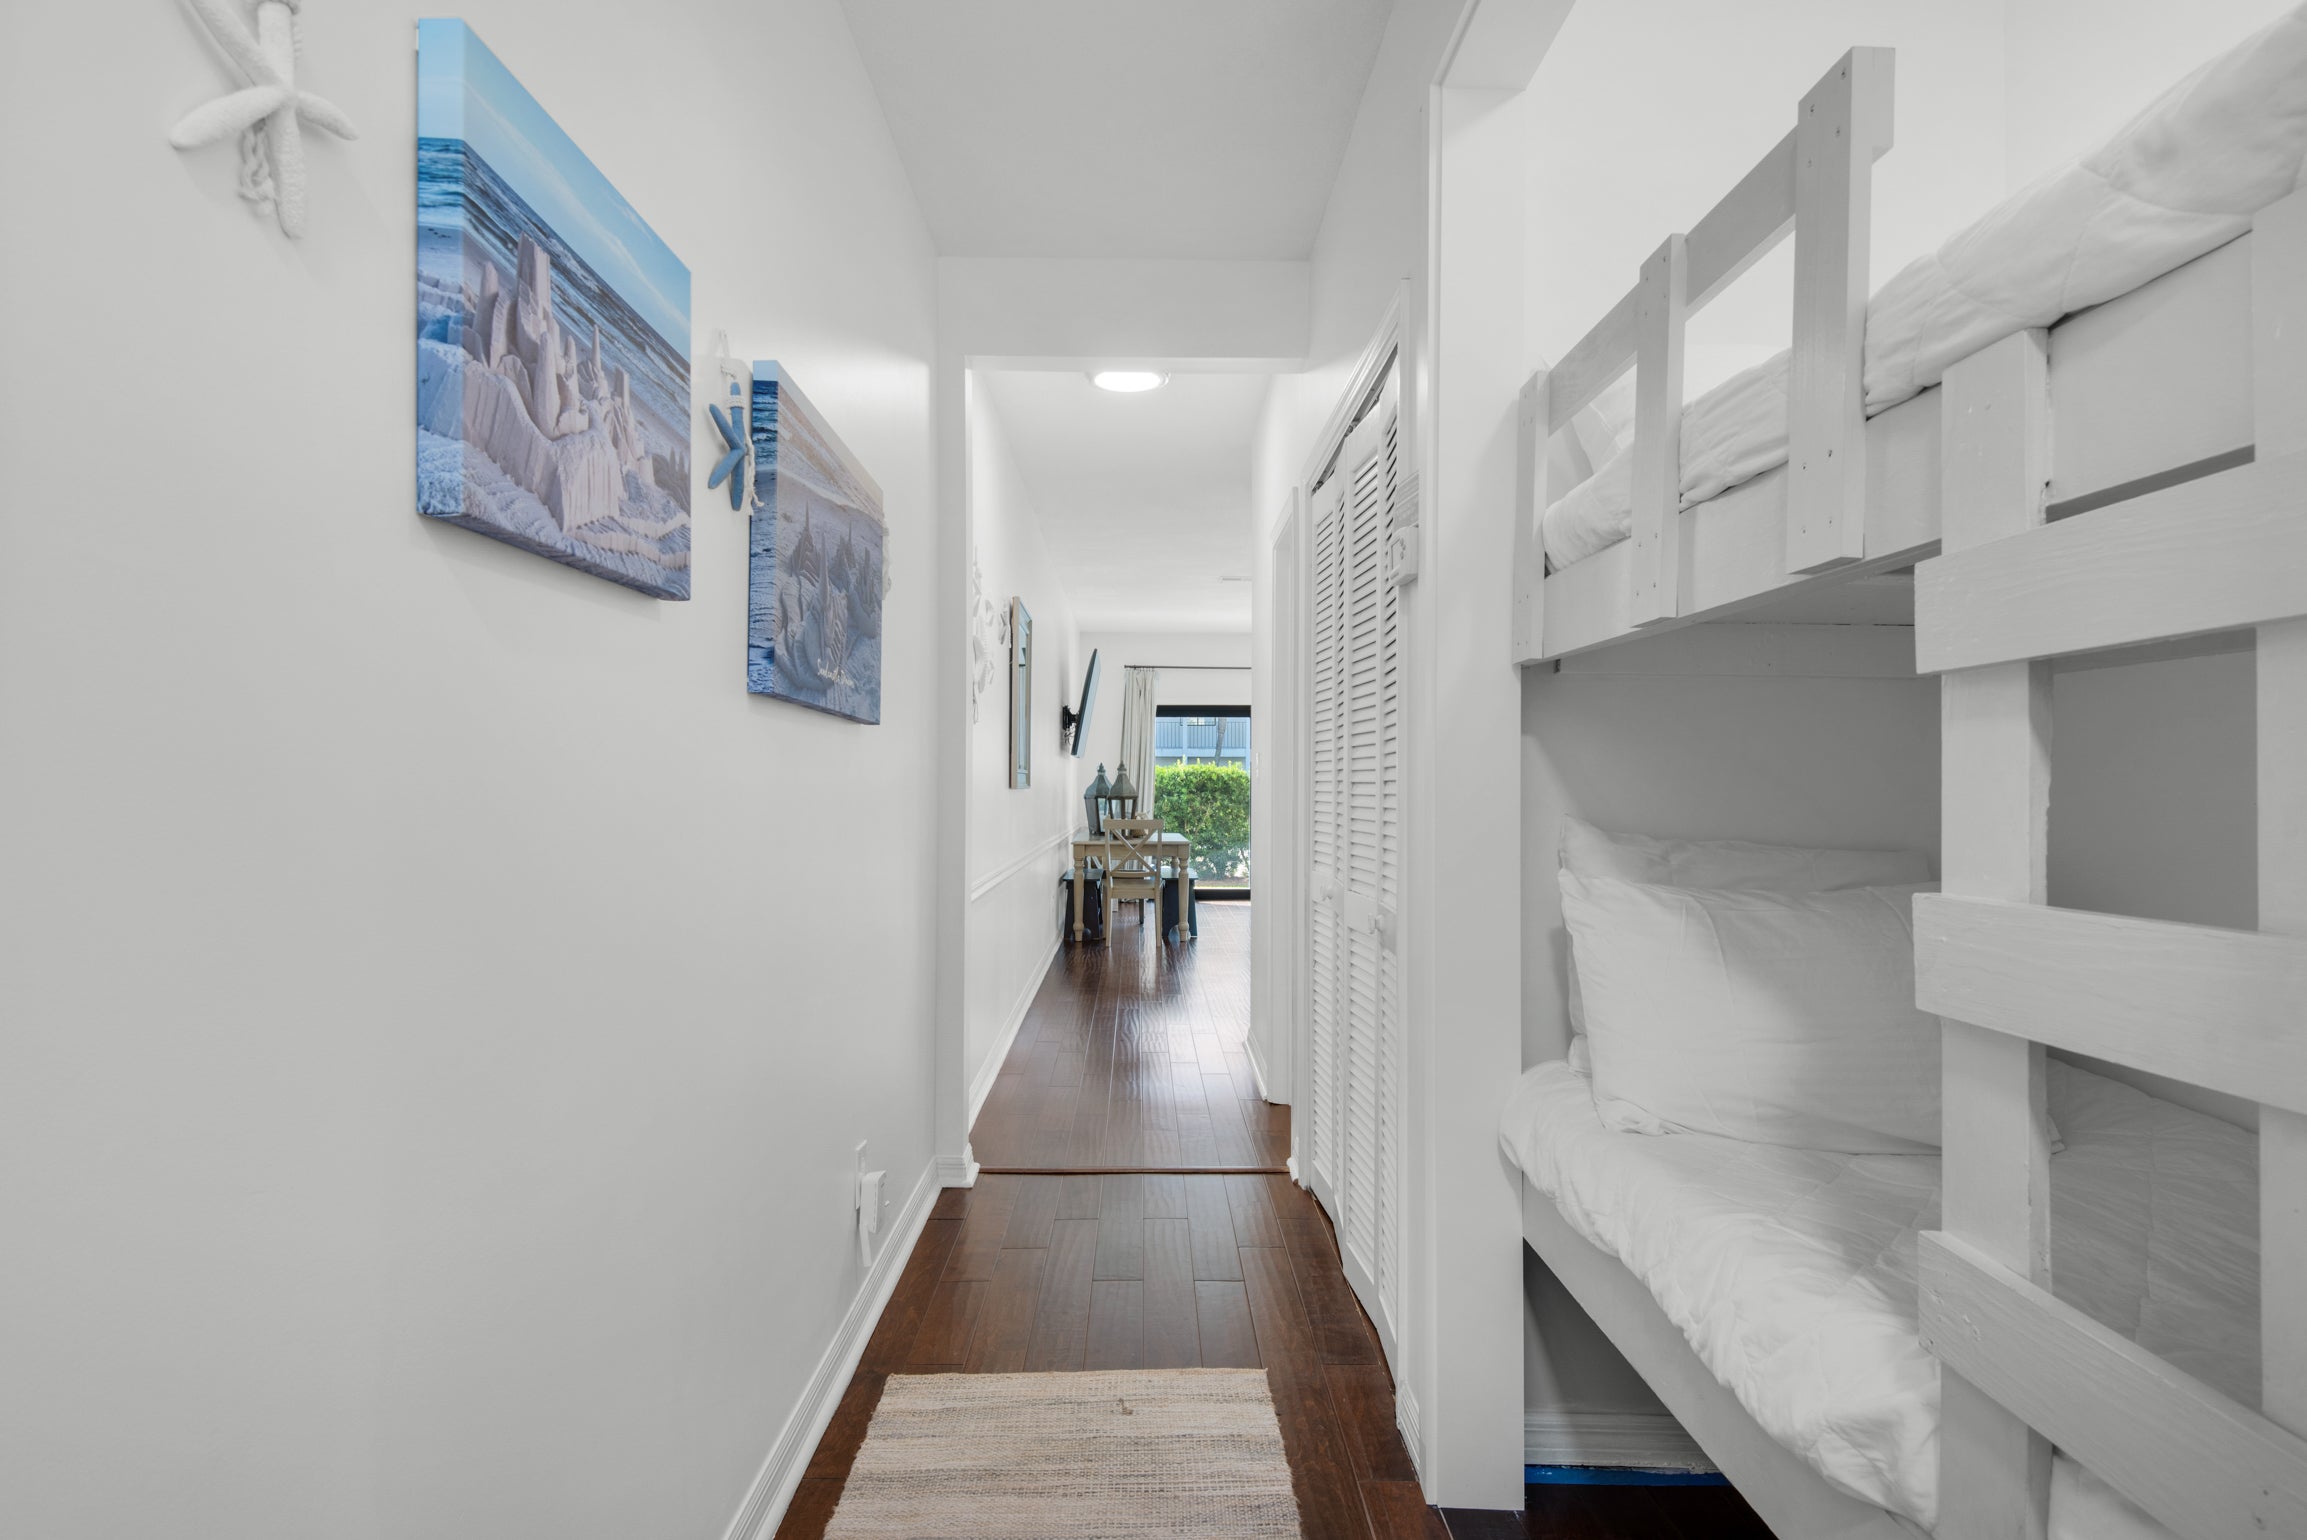 Hallway with bunk beds